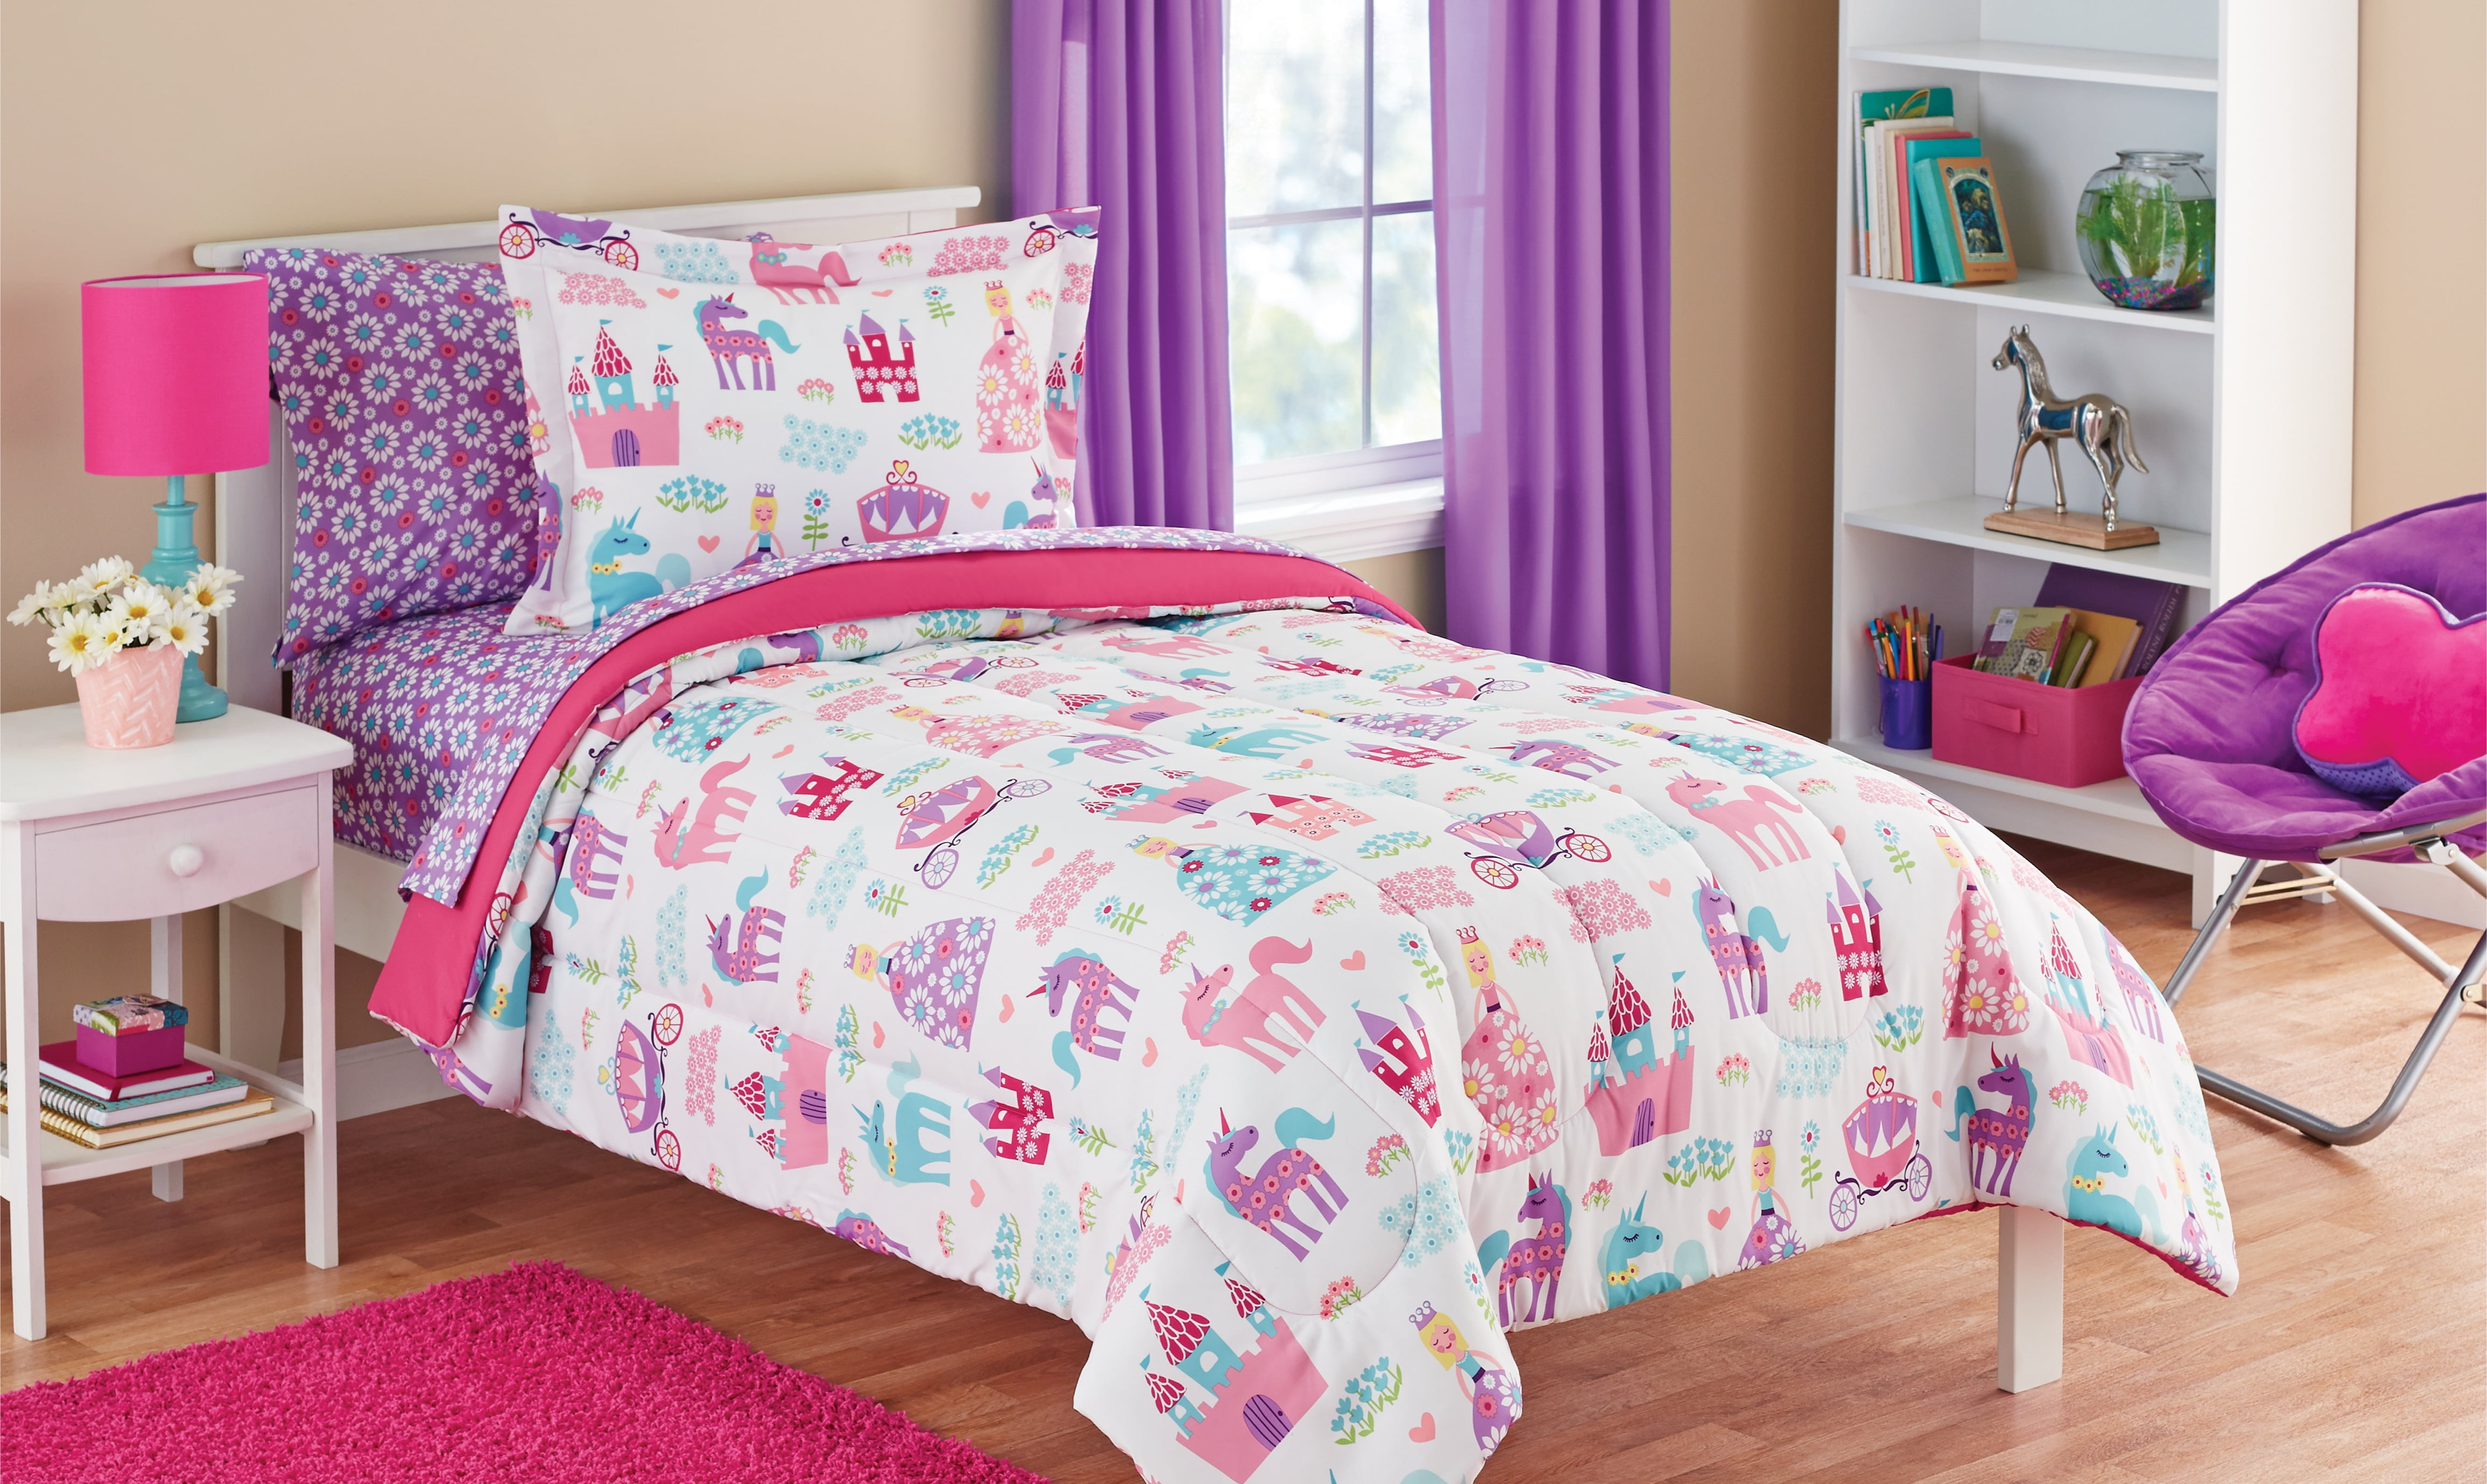 pink princess bedroom set